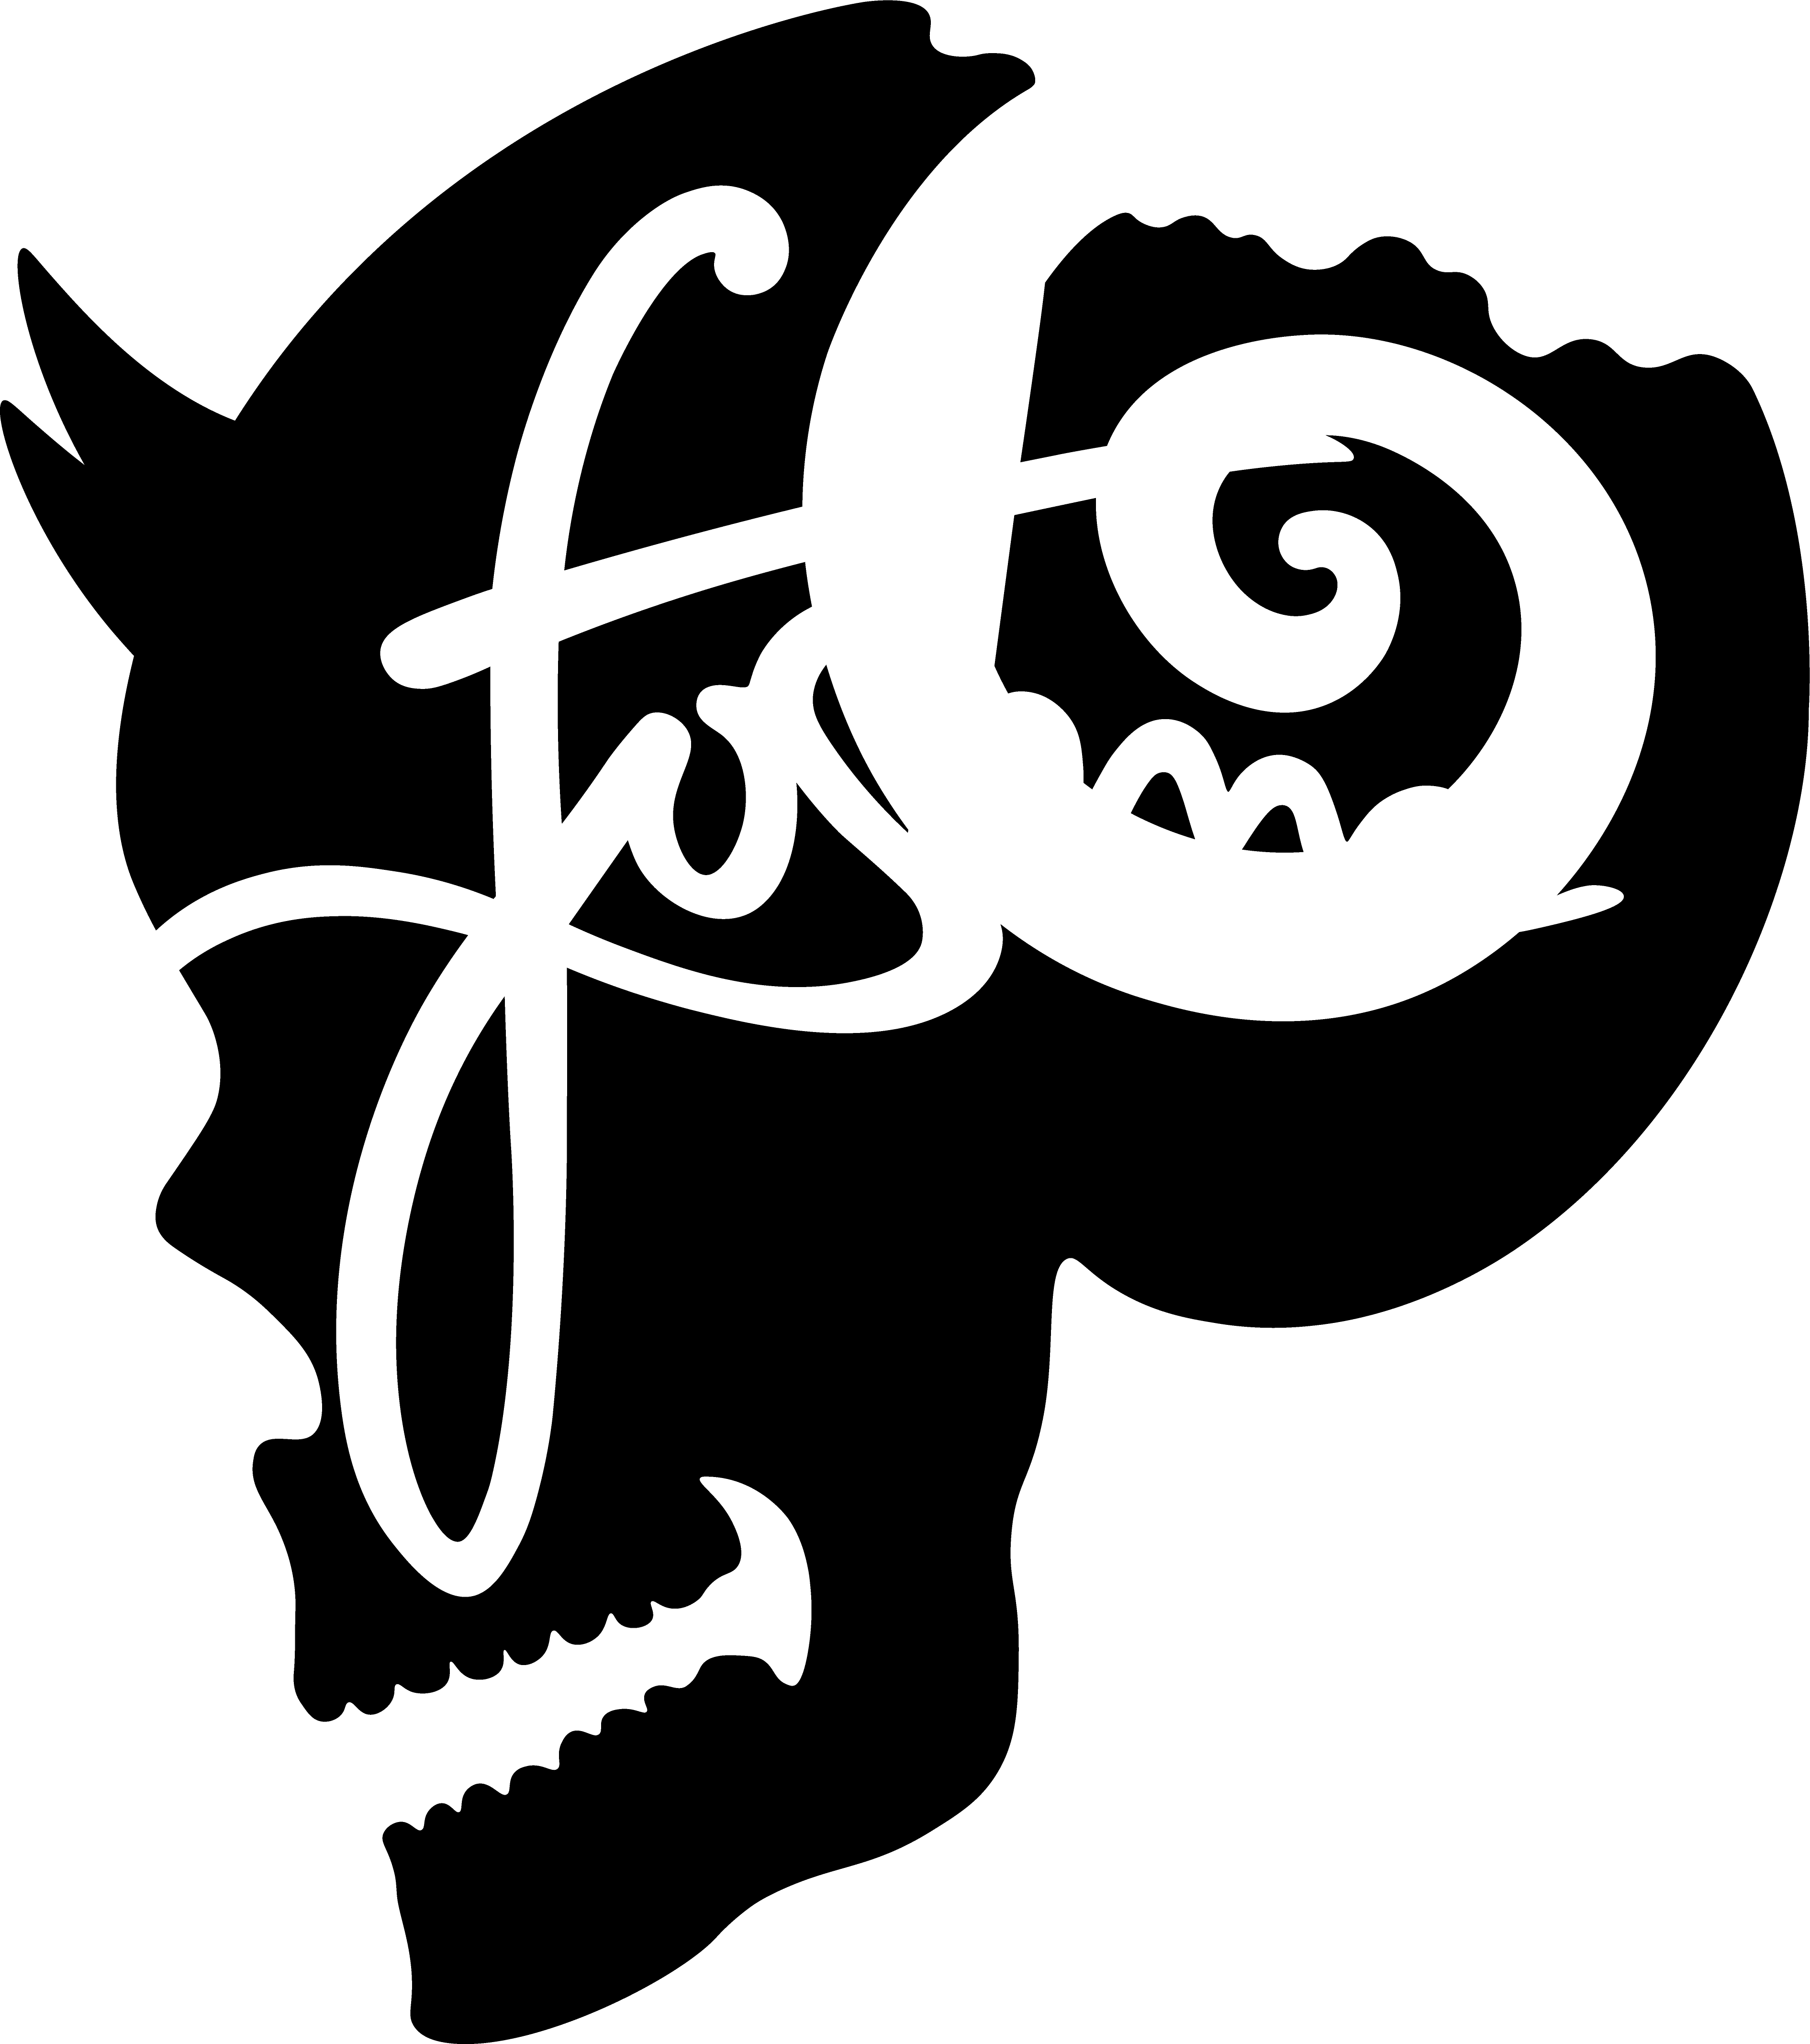 Foshna design